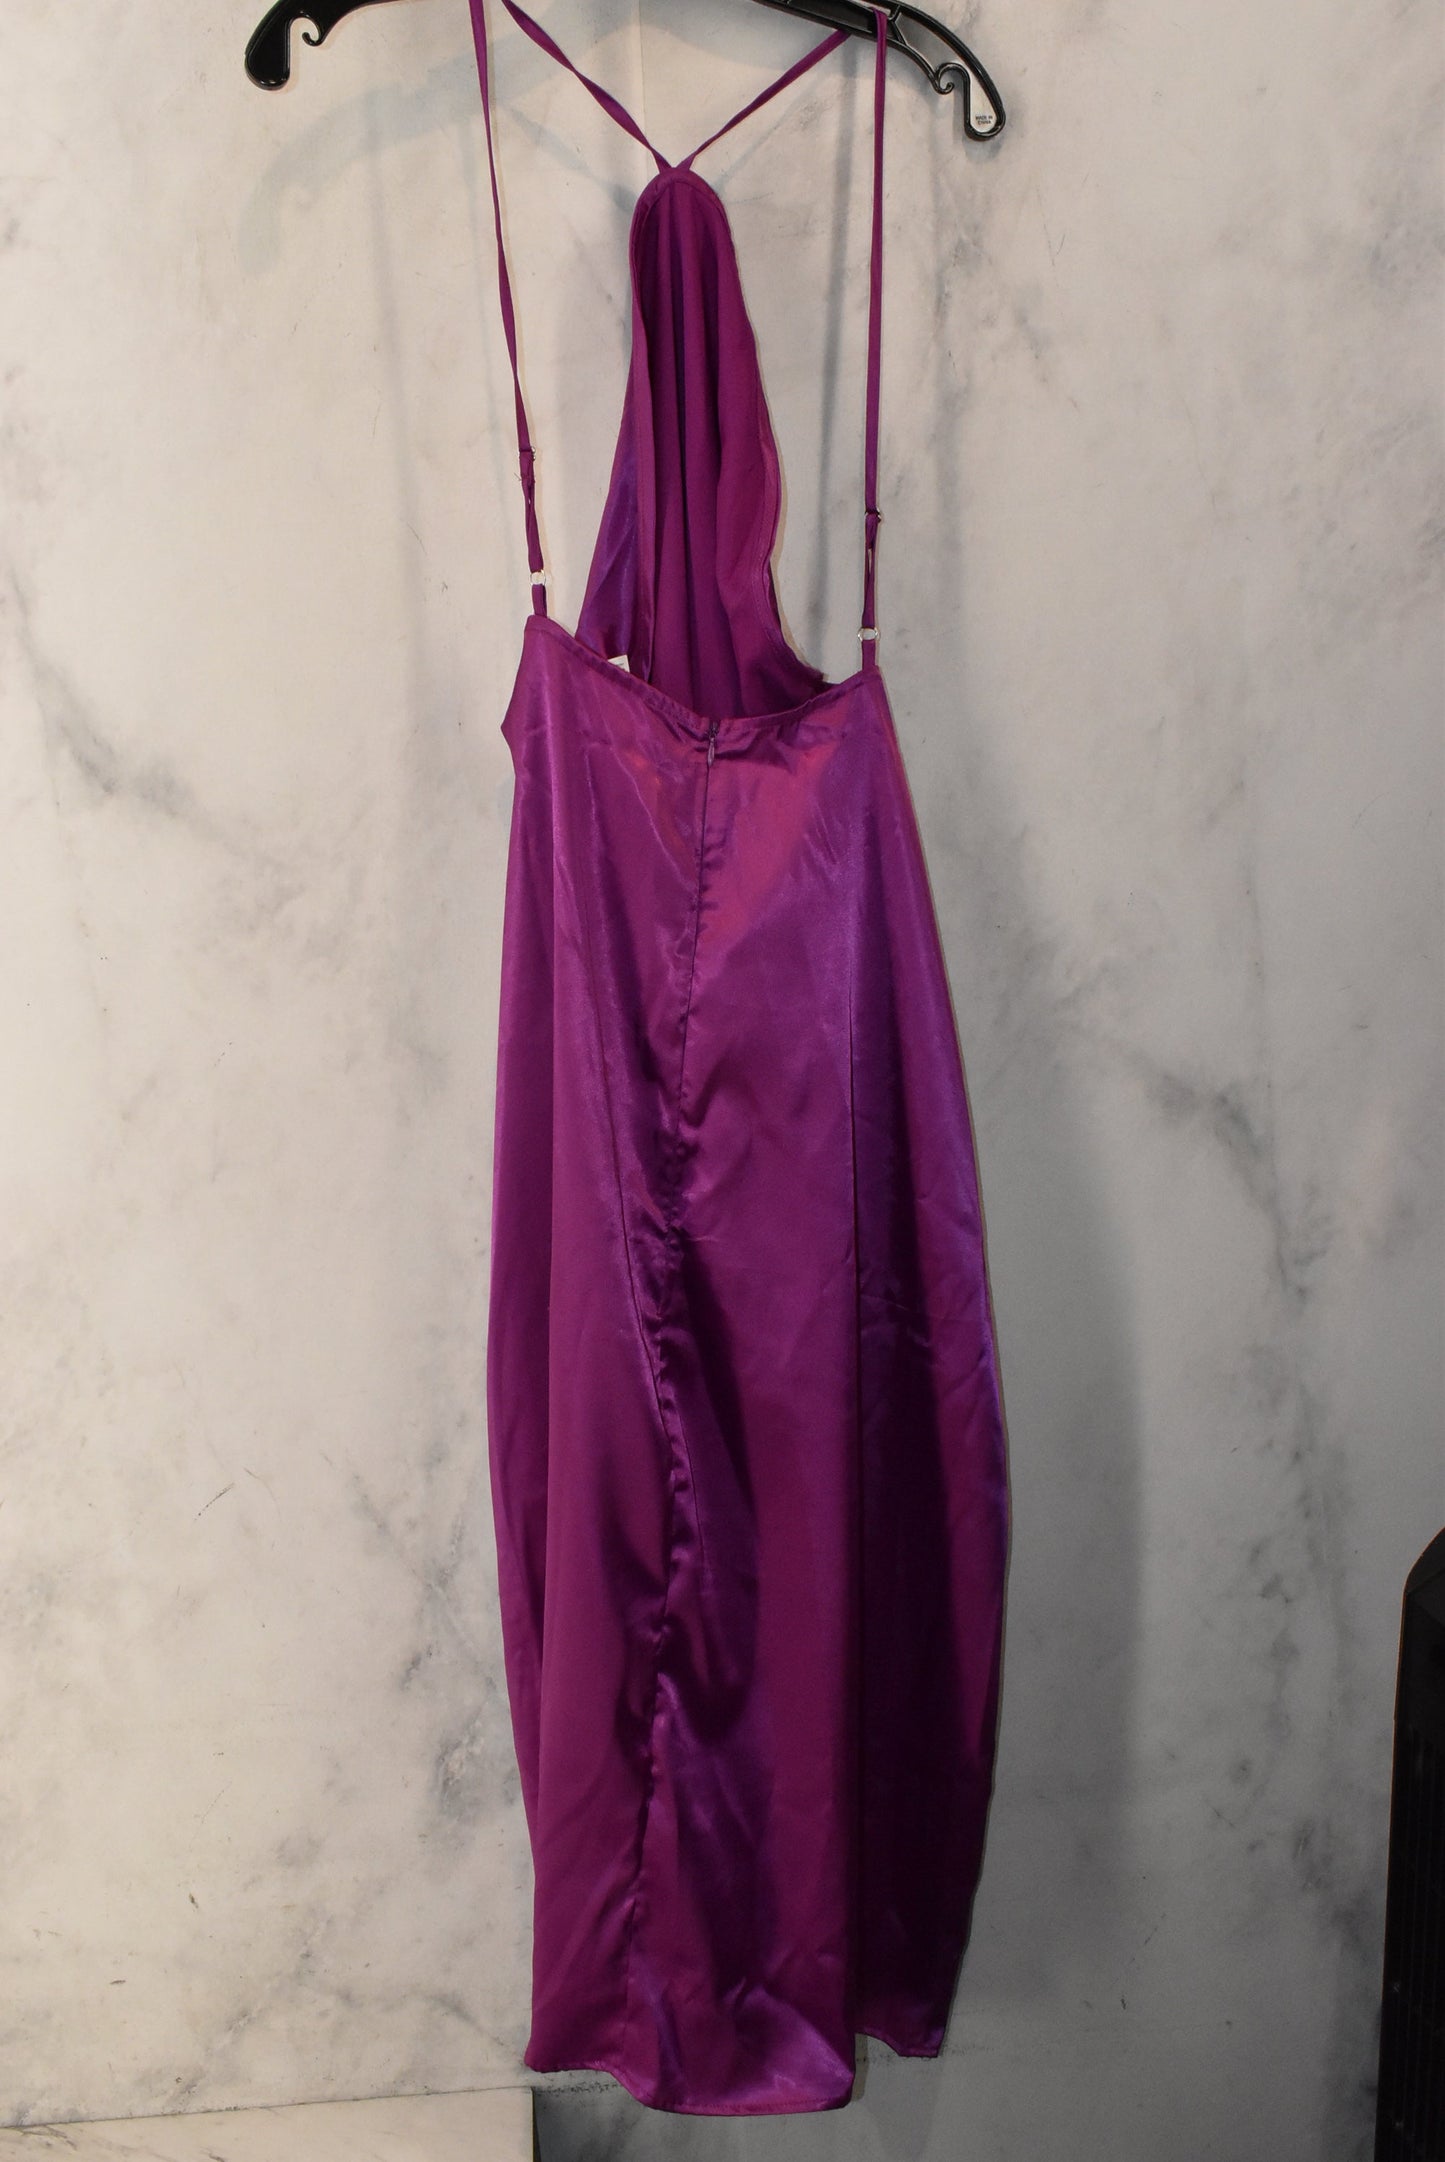 Dress Party Midi By Shein  Size: L